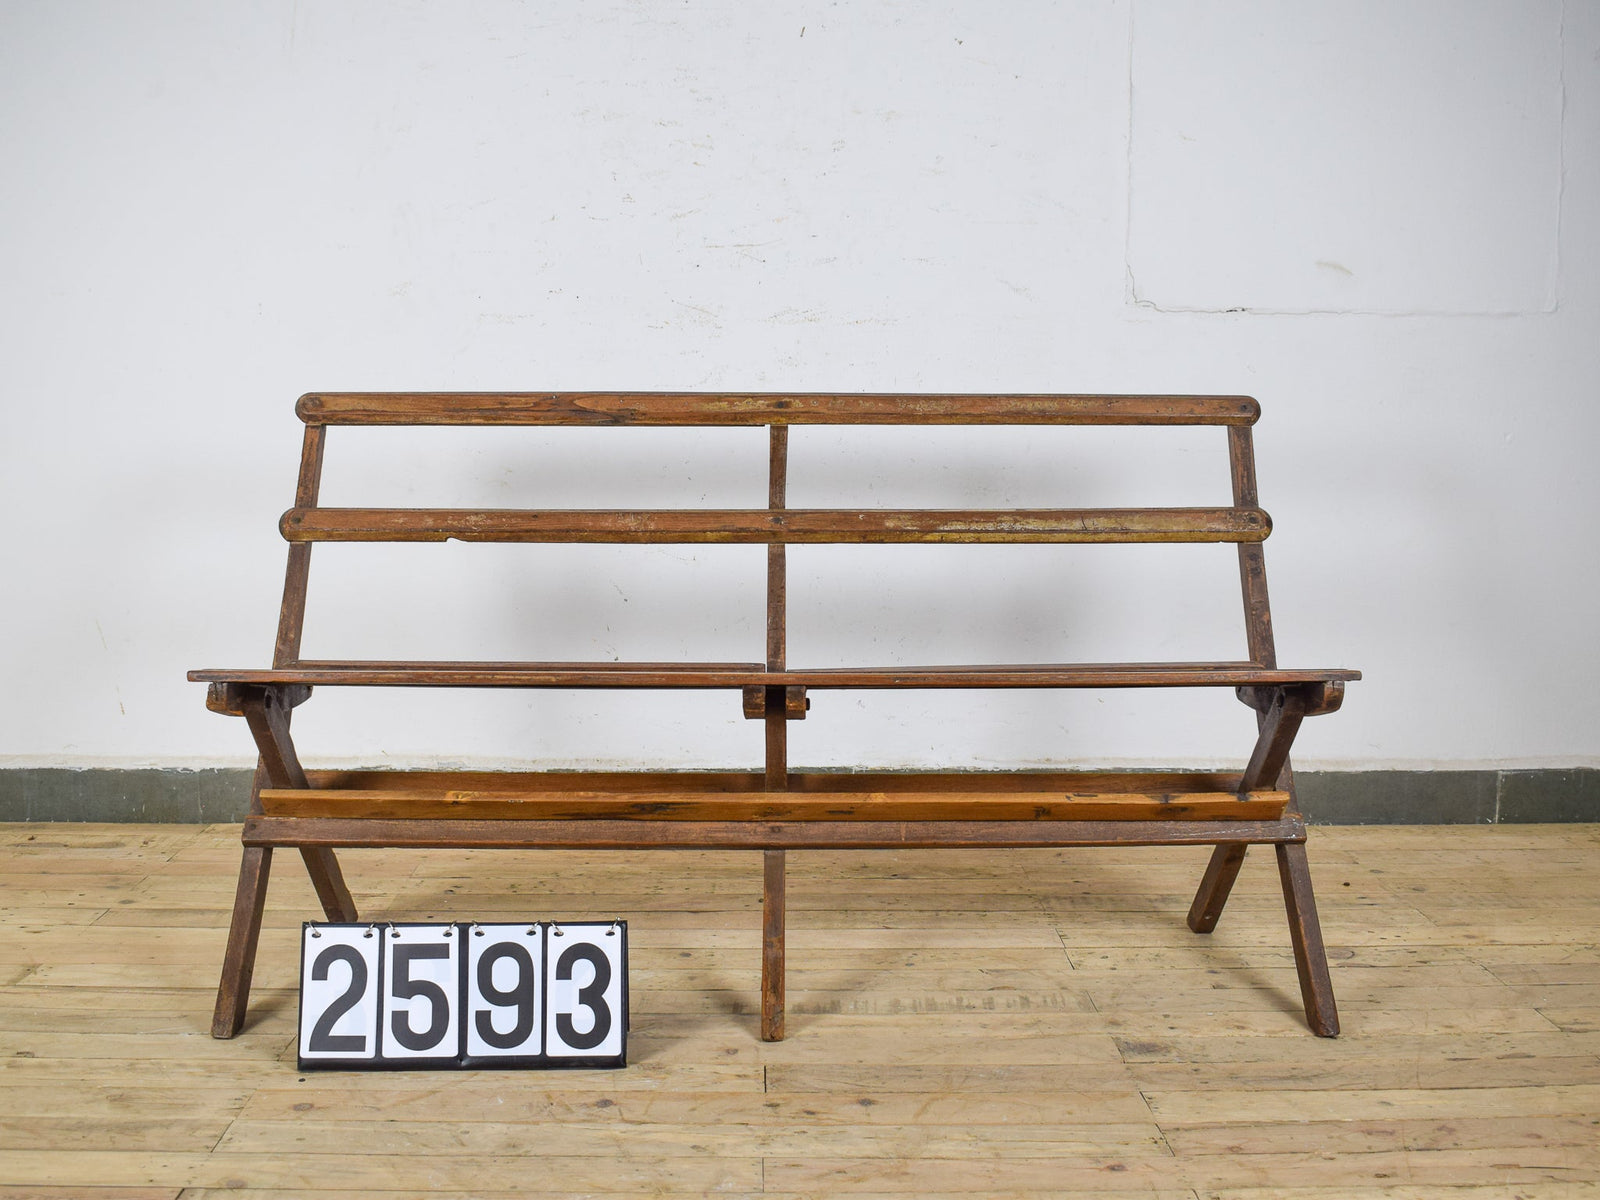 MILL-2593 Folding Wooden Bench C35